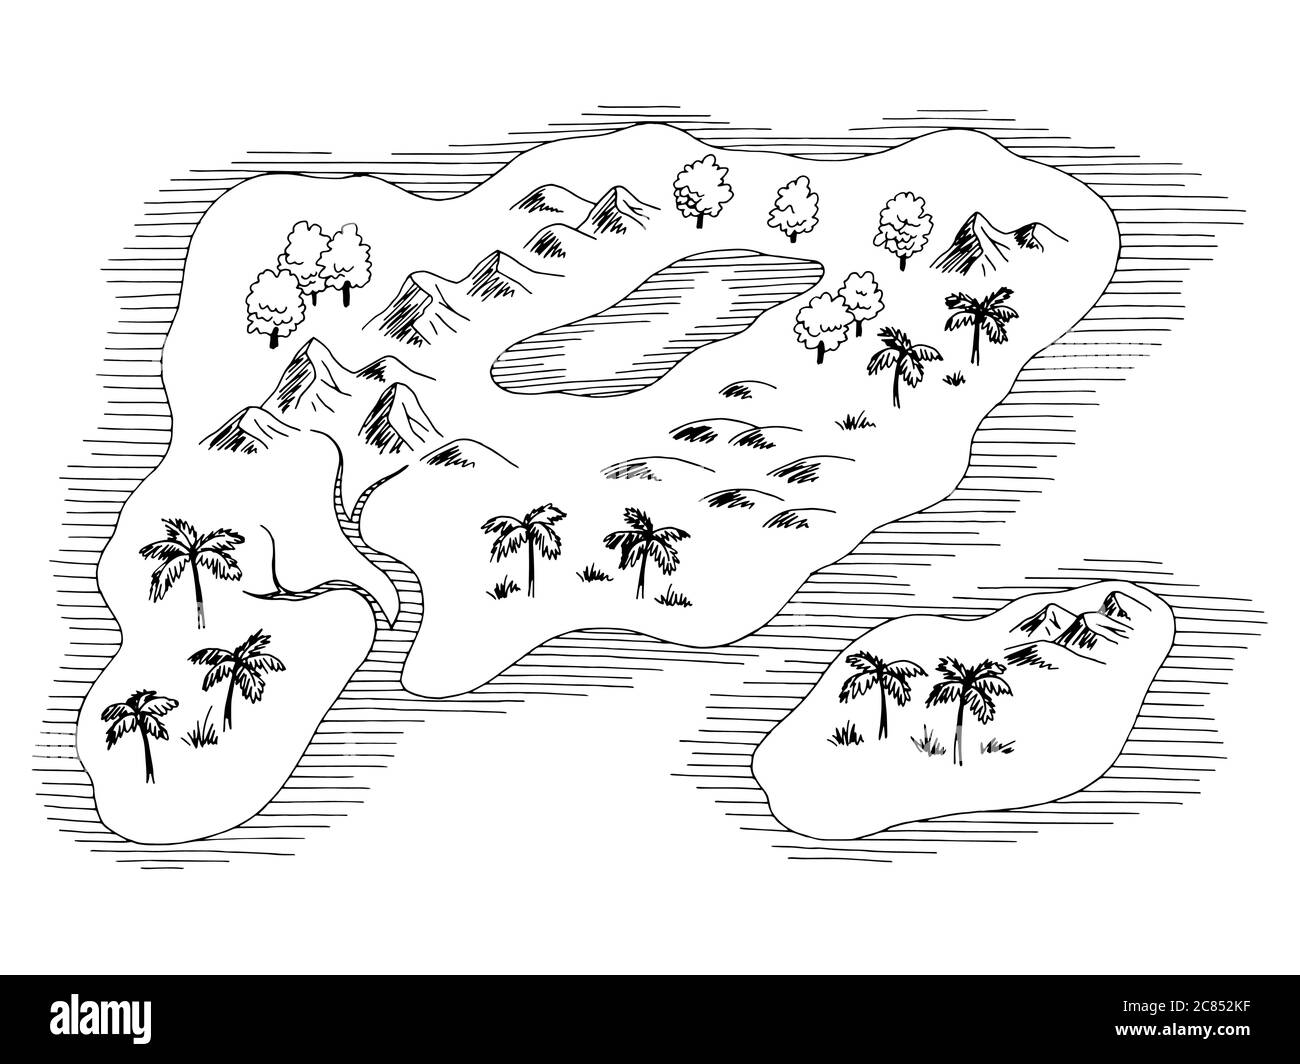 Island map retro graphic black white sketch illustration vector Stock Vector